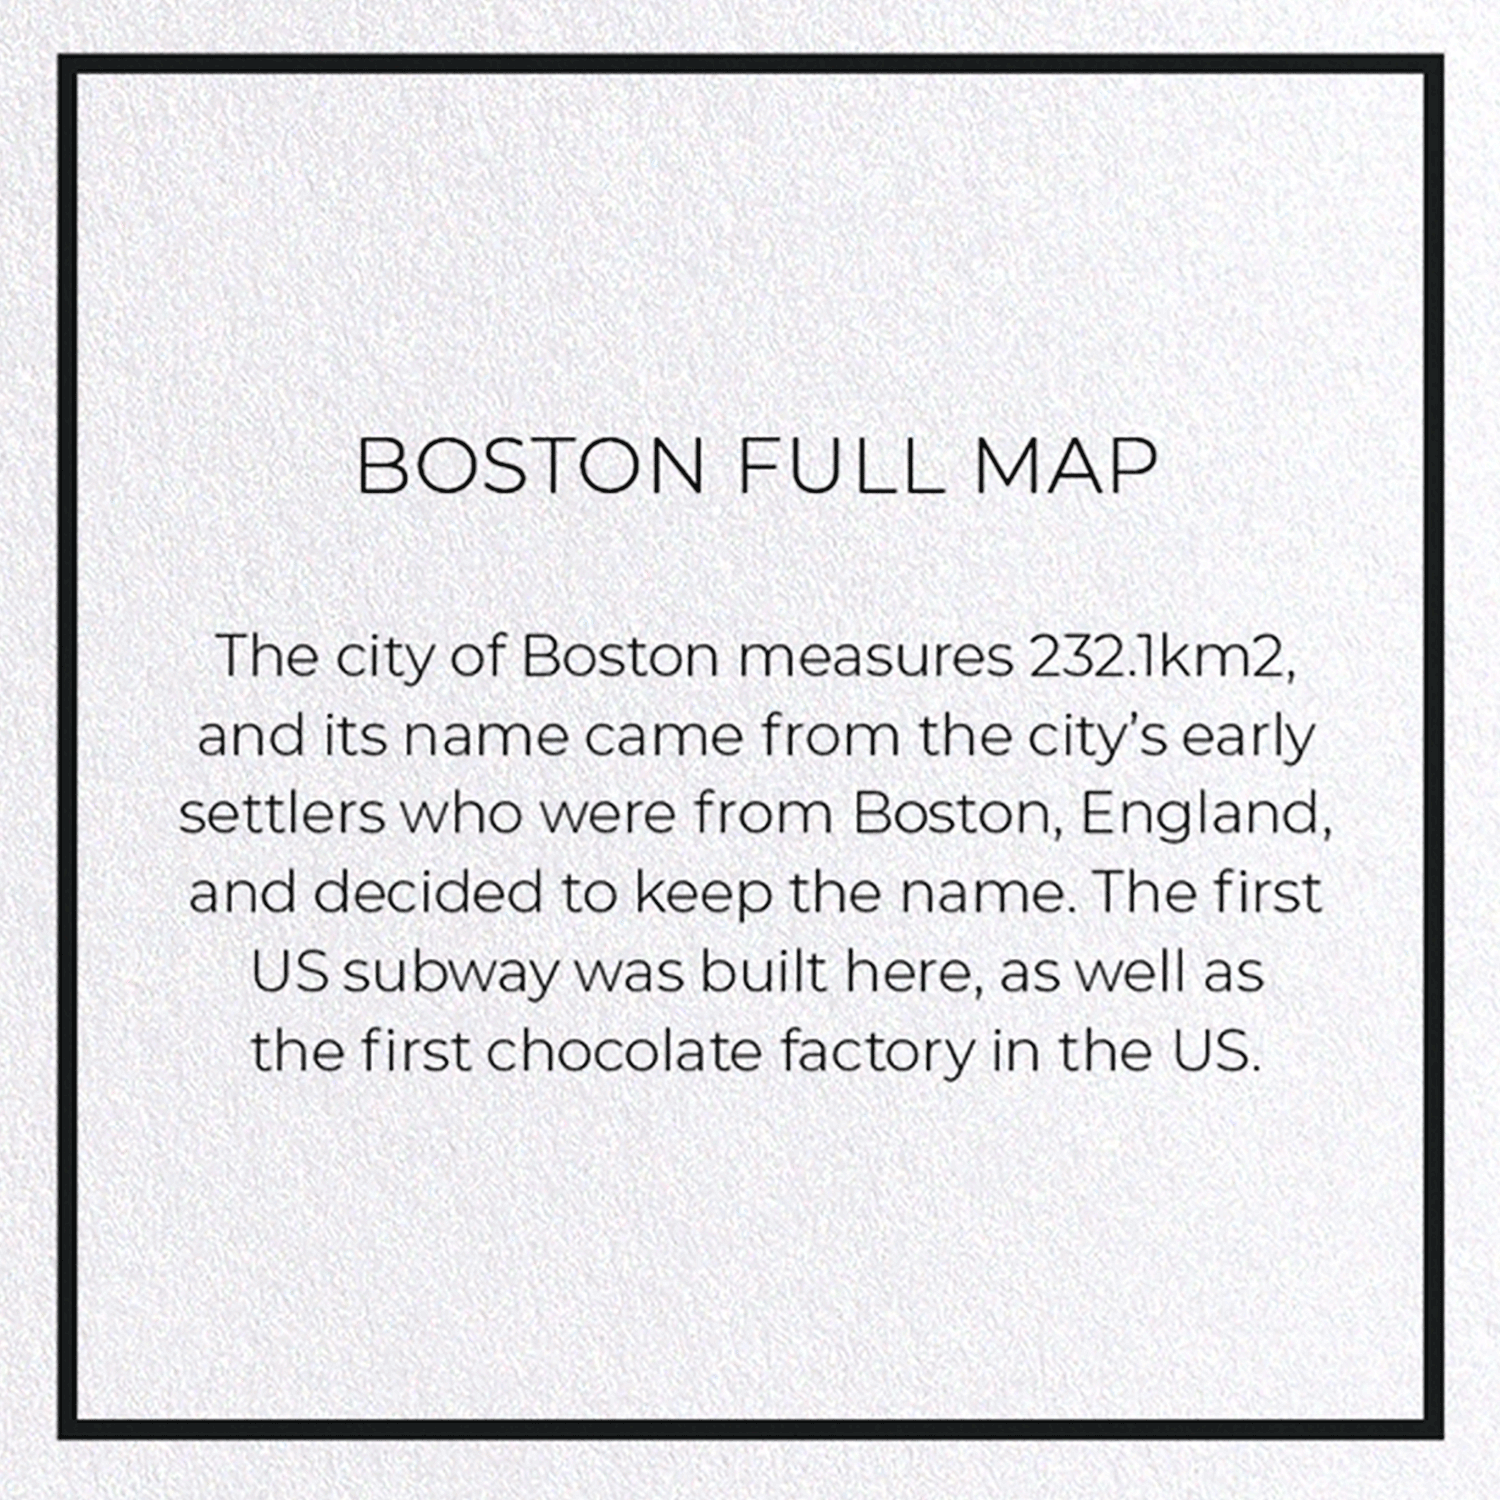 BOSTON FULL MAP